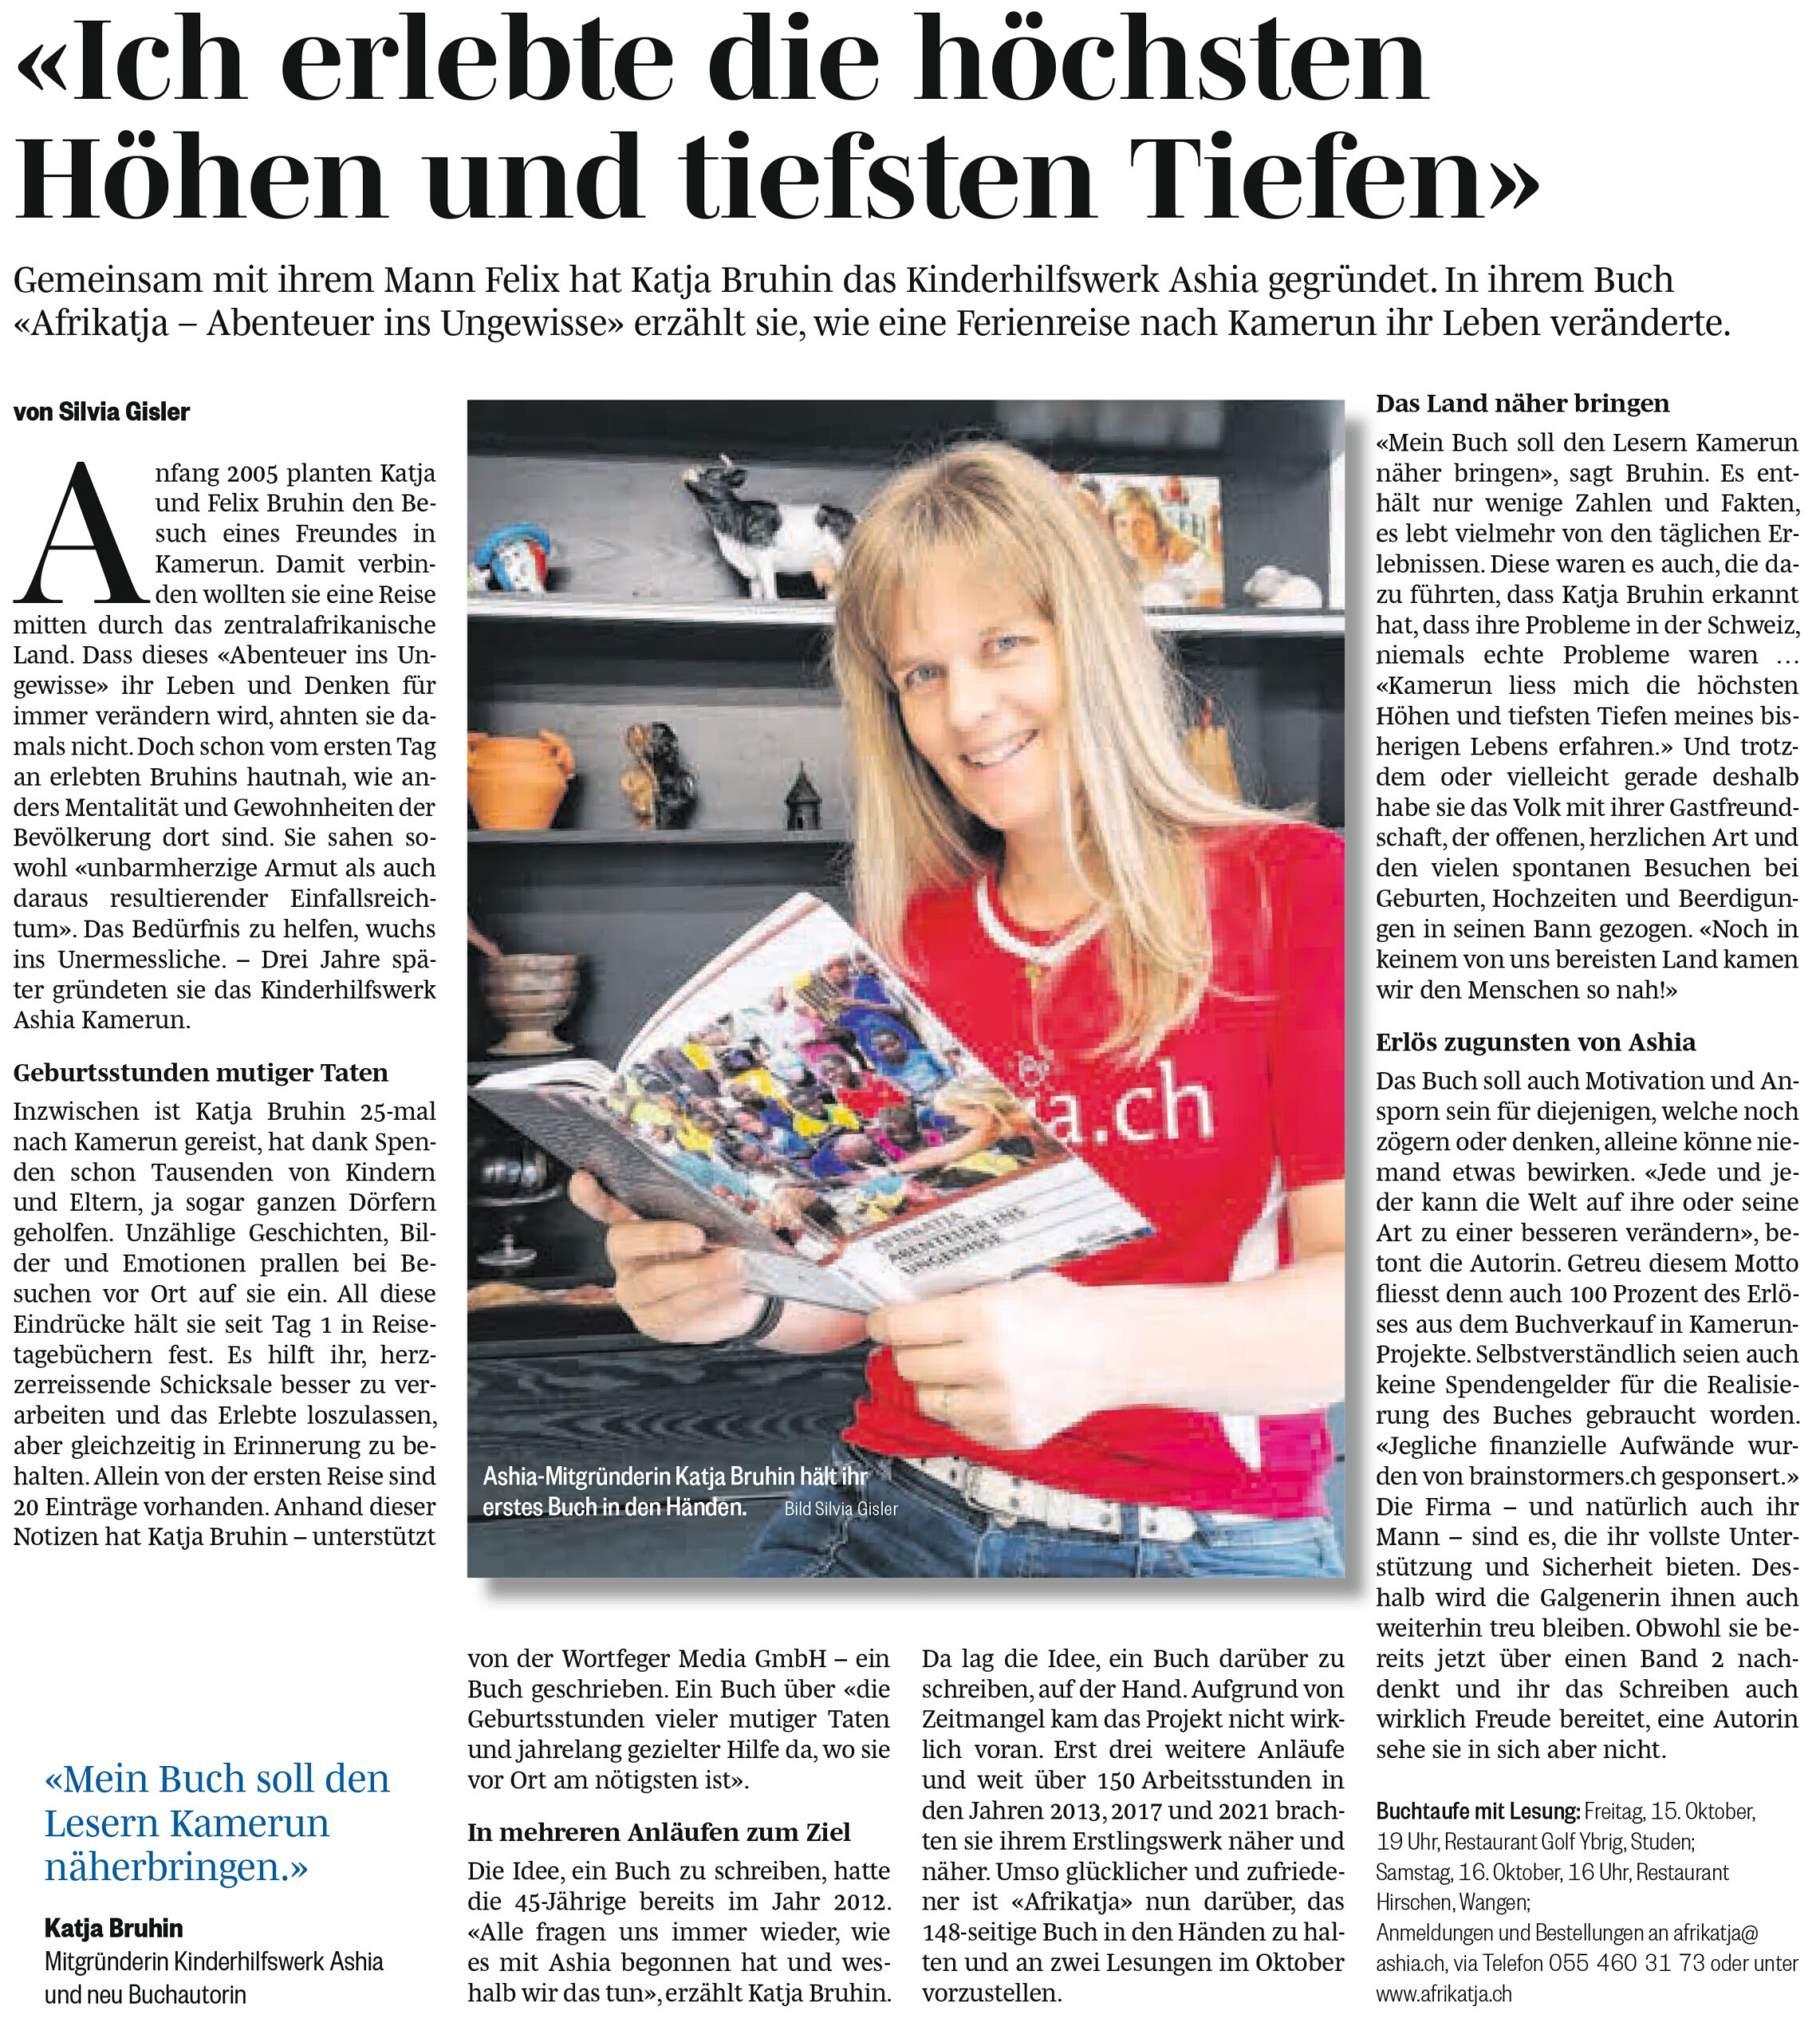 March Anzeiger Höfner Volksblatt